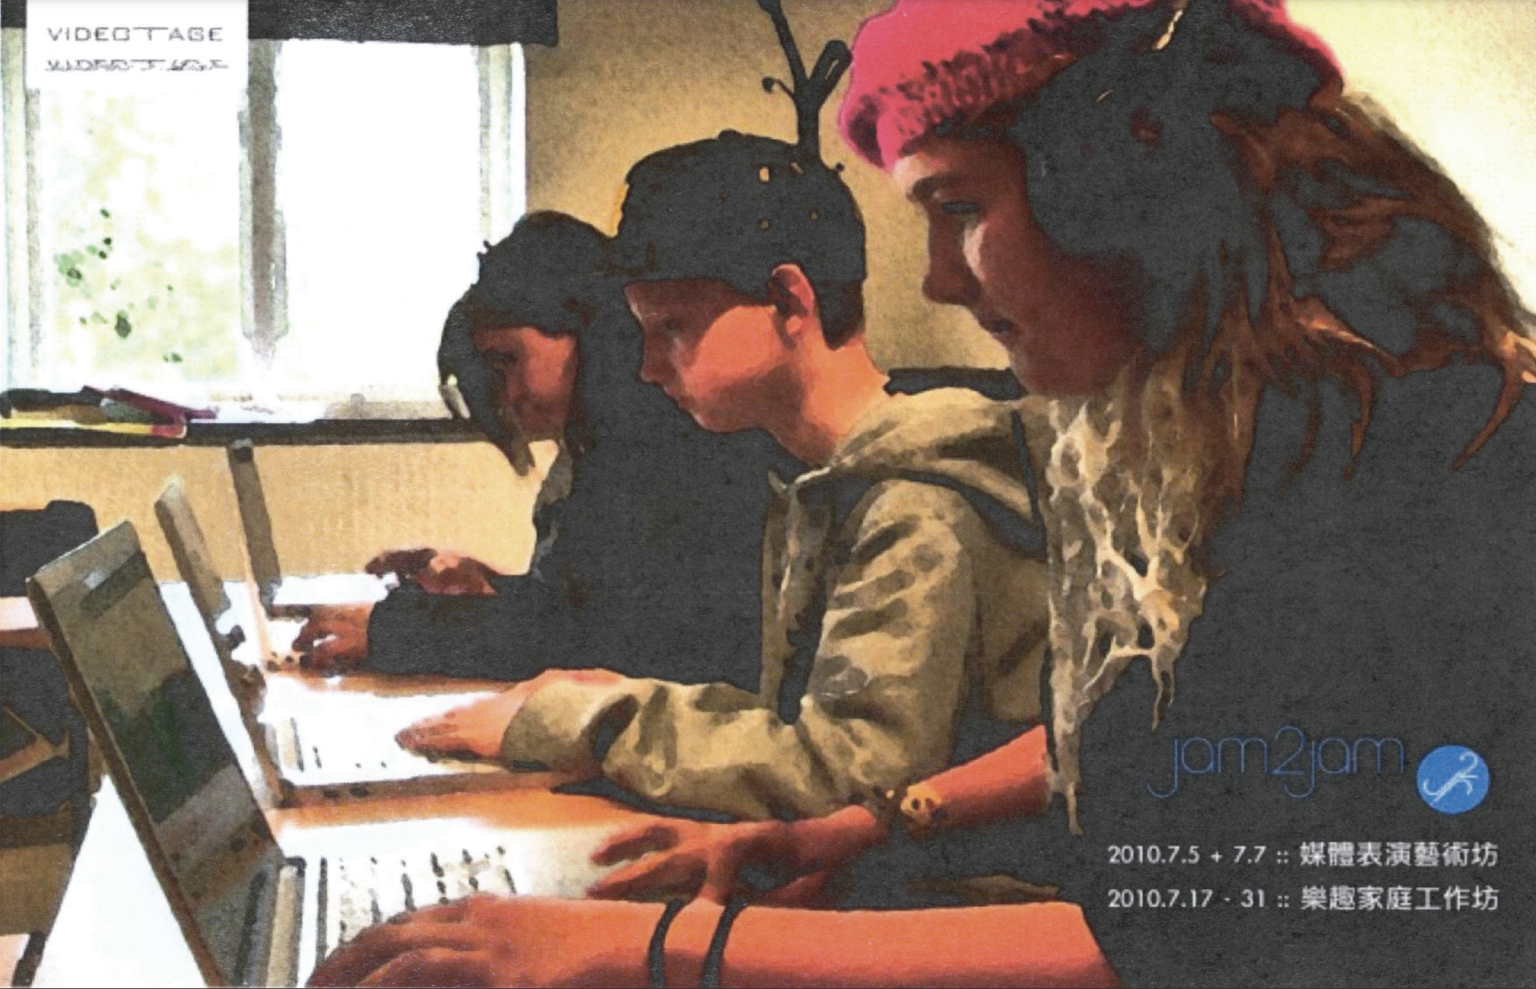 jam2jam-VJDJing Workshop for school kids 媒體表演藝術坊